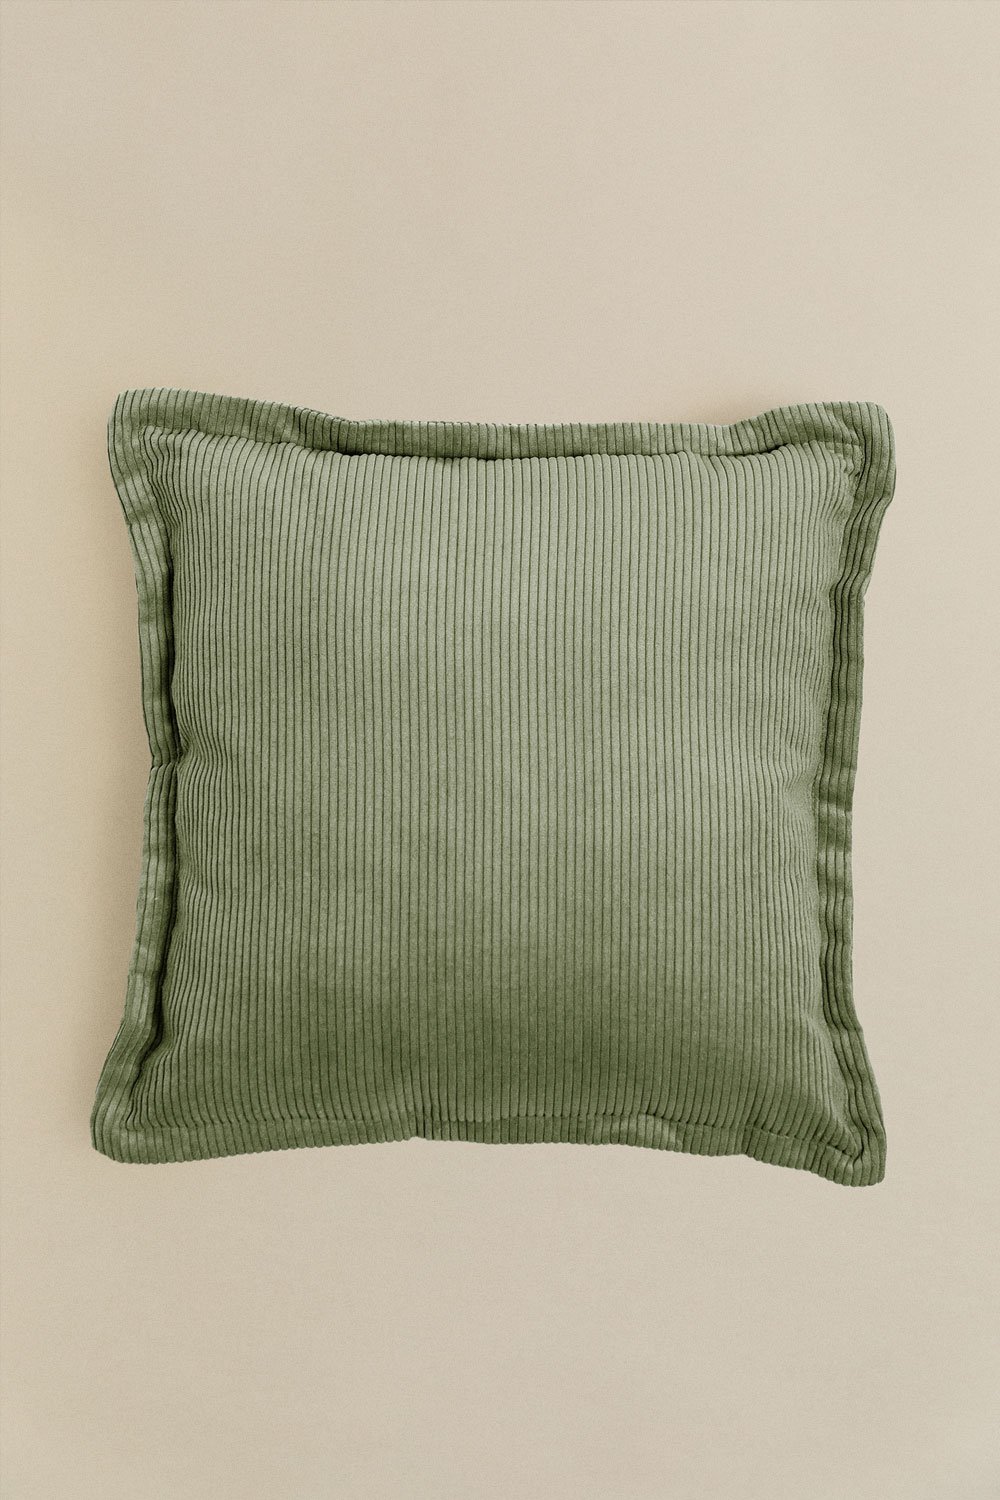 Kata corduroy square cushion (53x53 cm) , gallery image 1